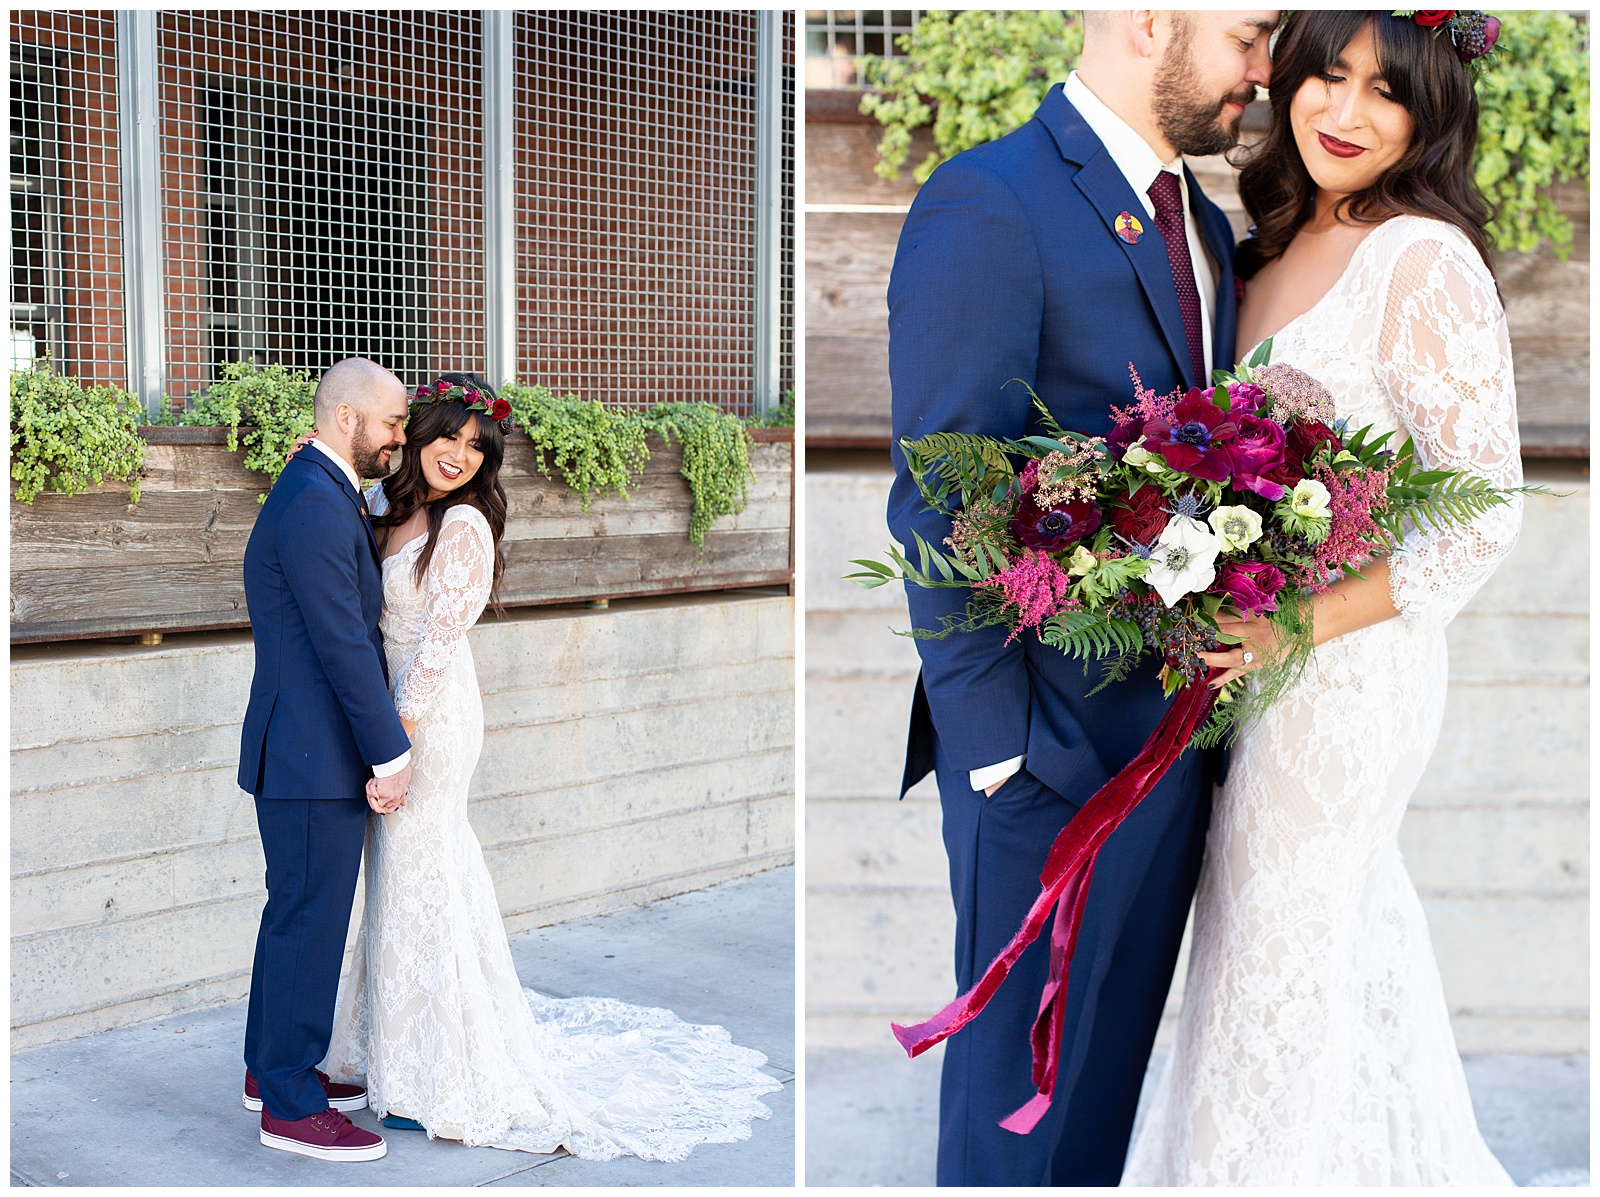 Downtown Phoenix wedding photos by riane roberts